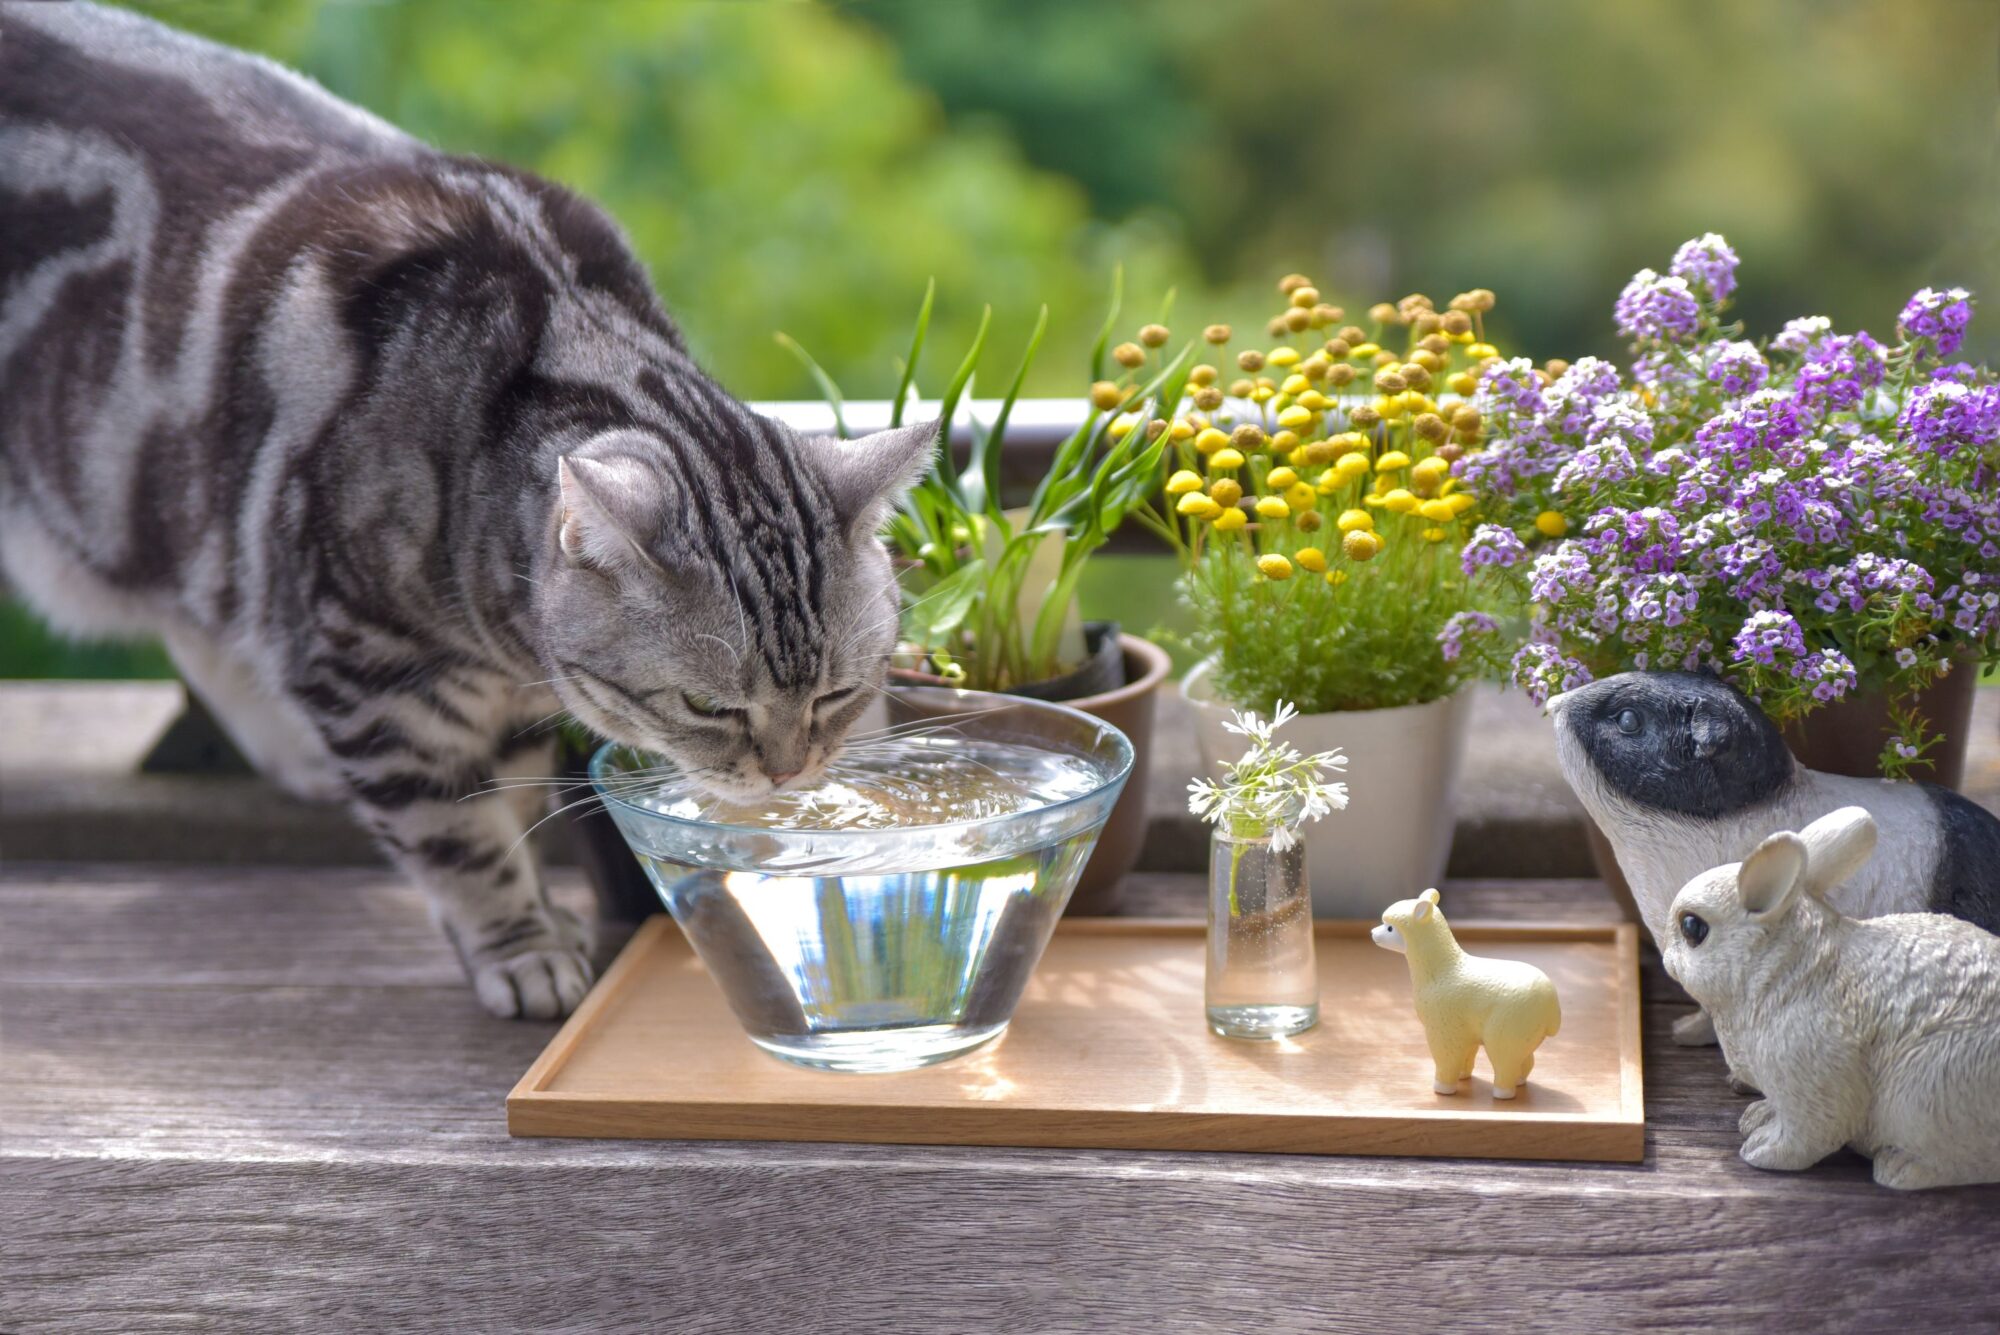 cat drinking water.